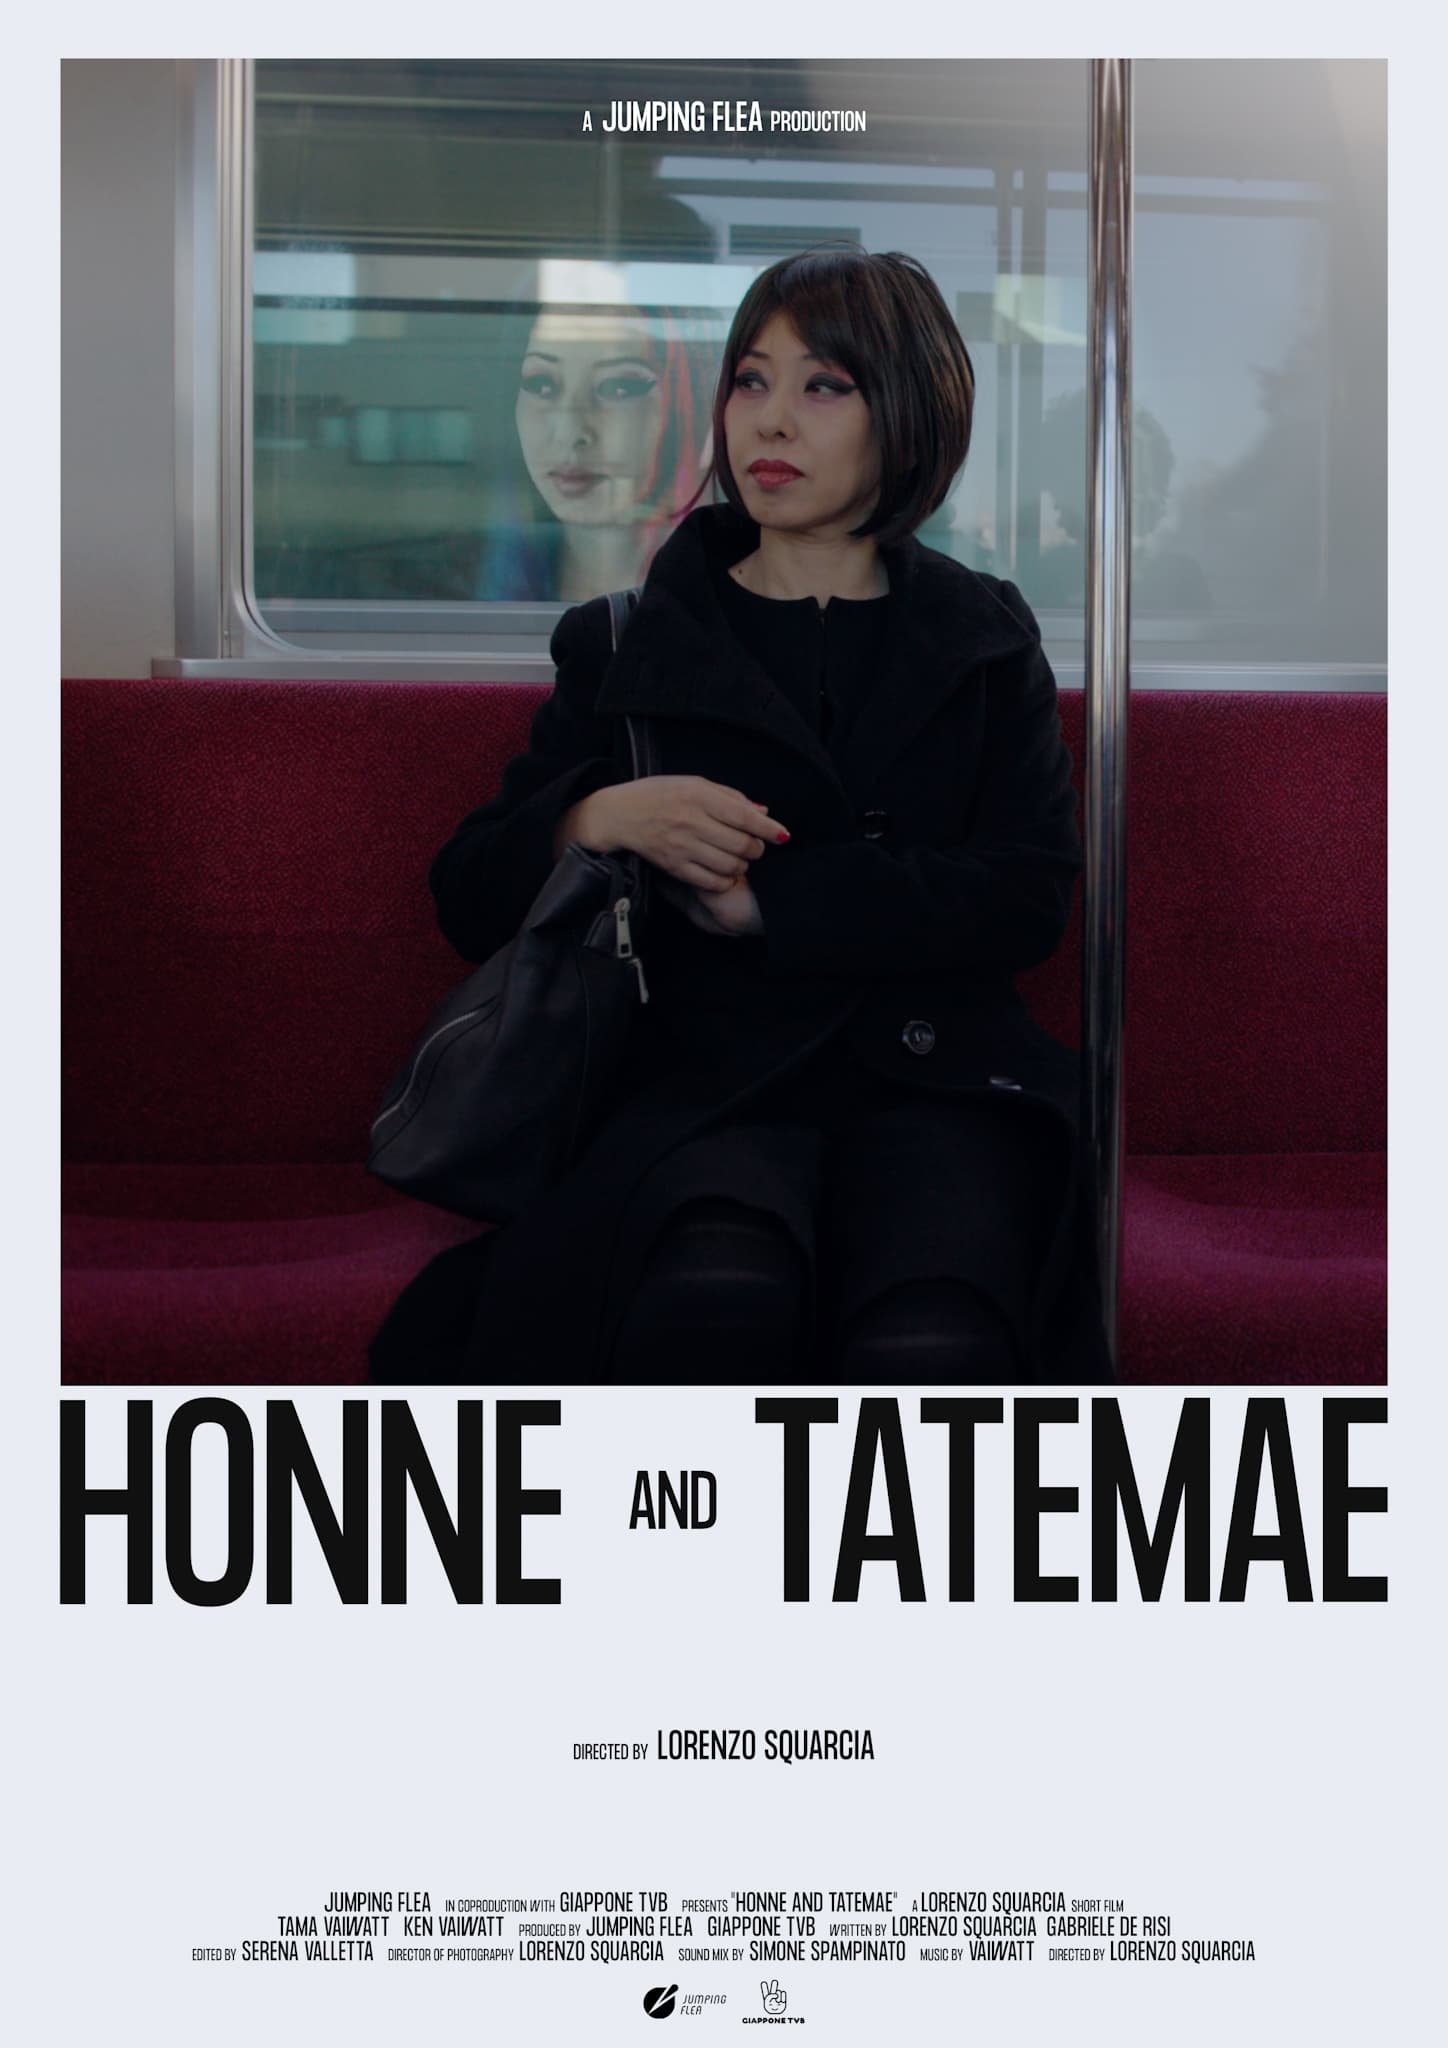 Honne and tatemae